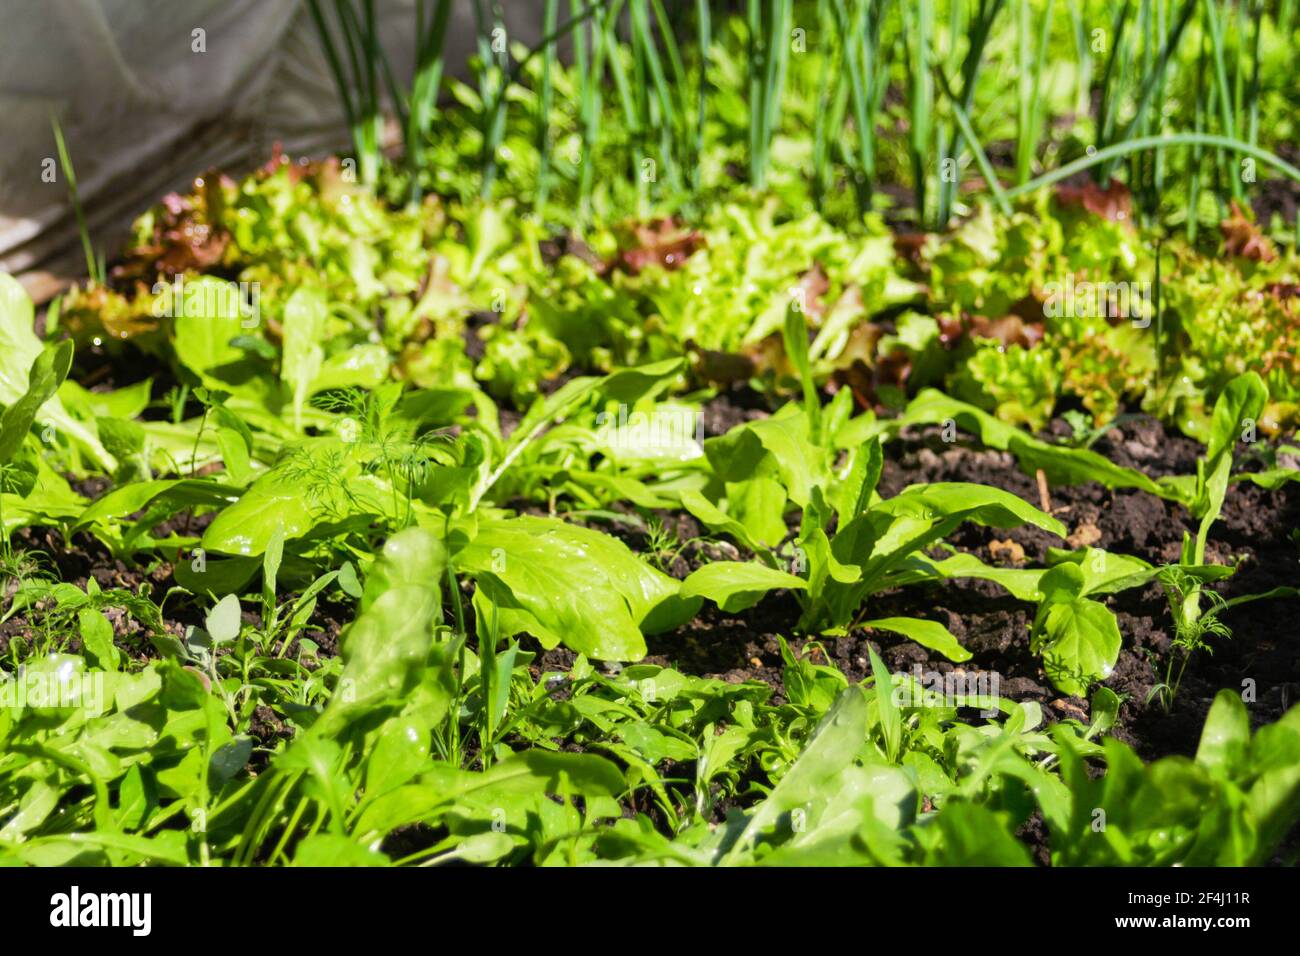 Defocus organic farm vegetable gardening. Onion, leek, aragula, spinach, salad, lettuce. Greens, greenery in arch solar house. Organic farming Stock Photo